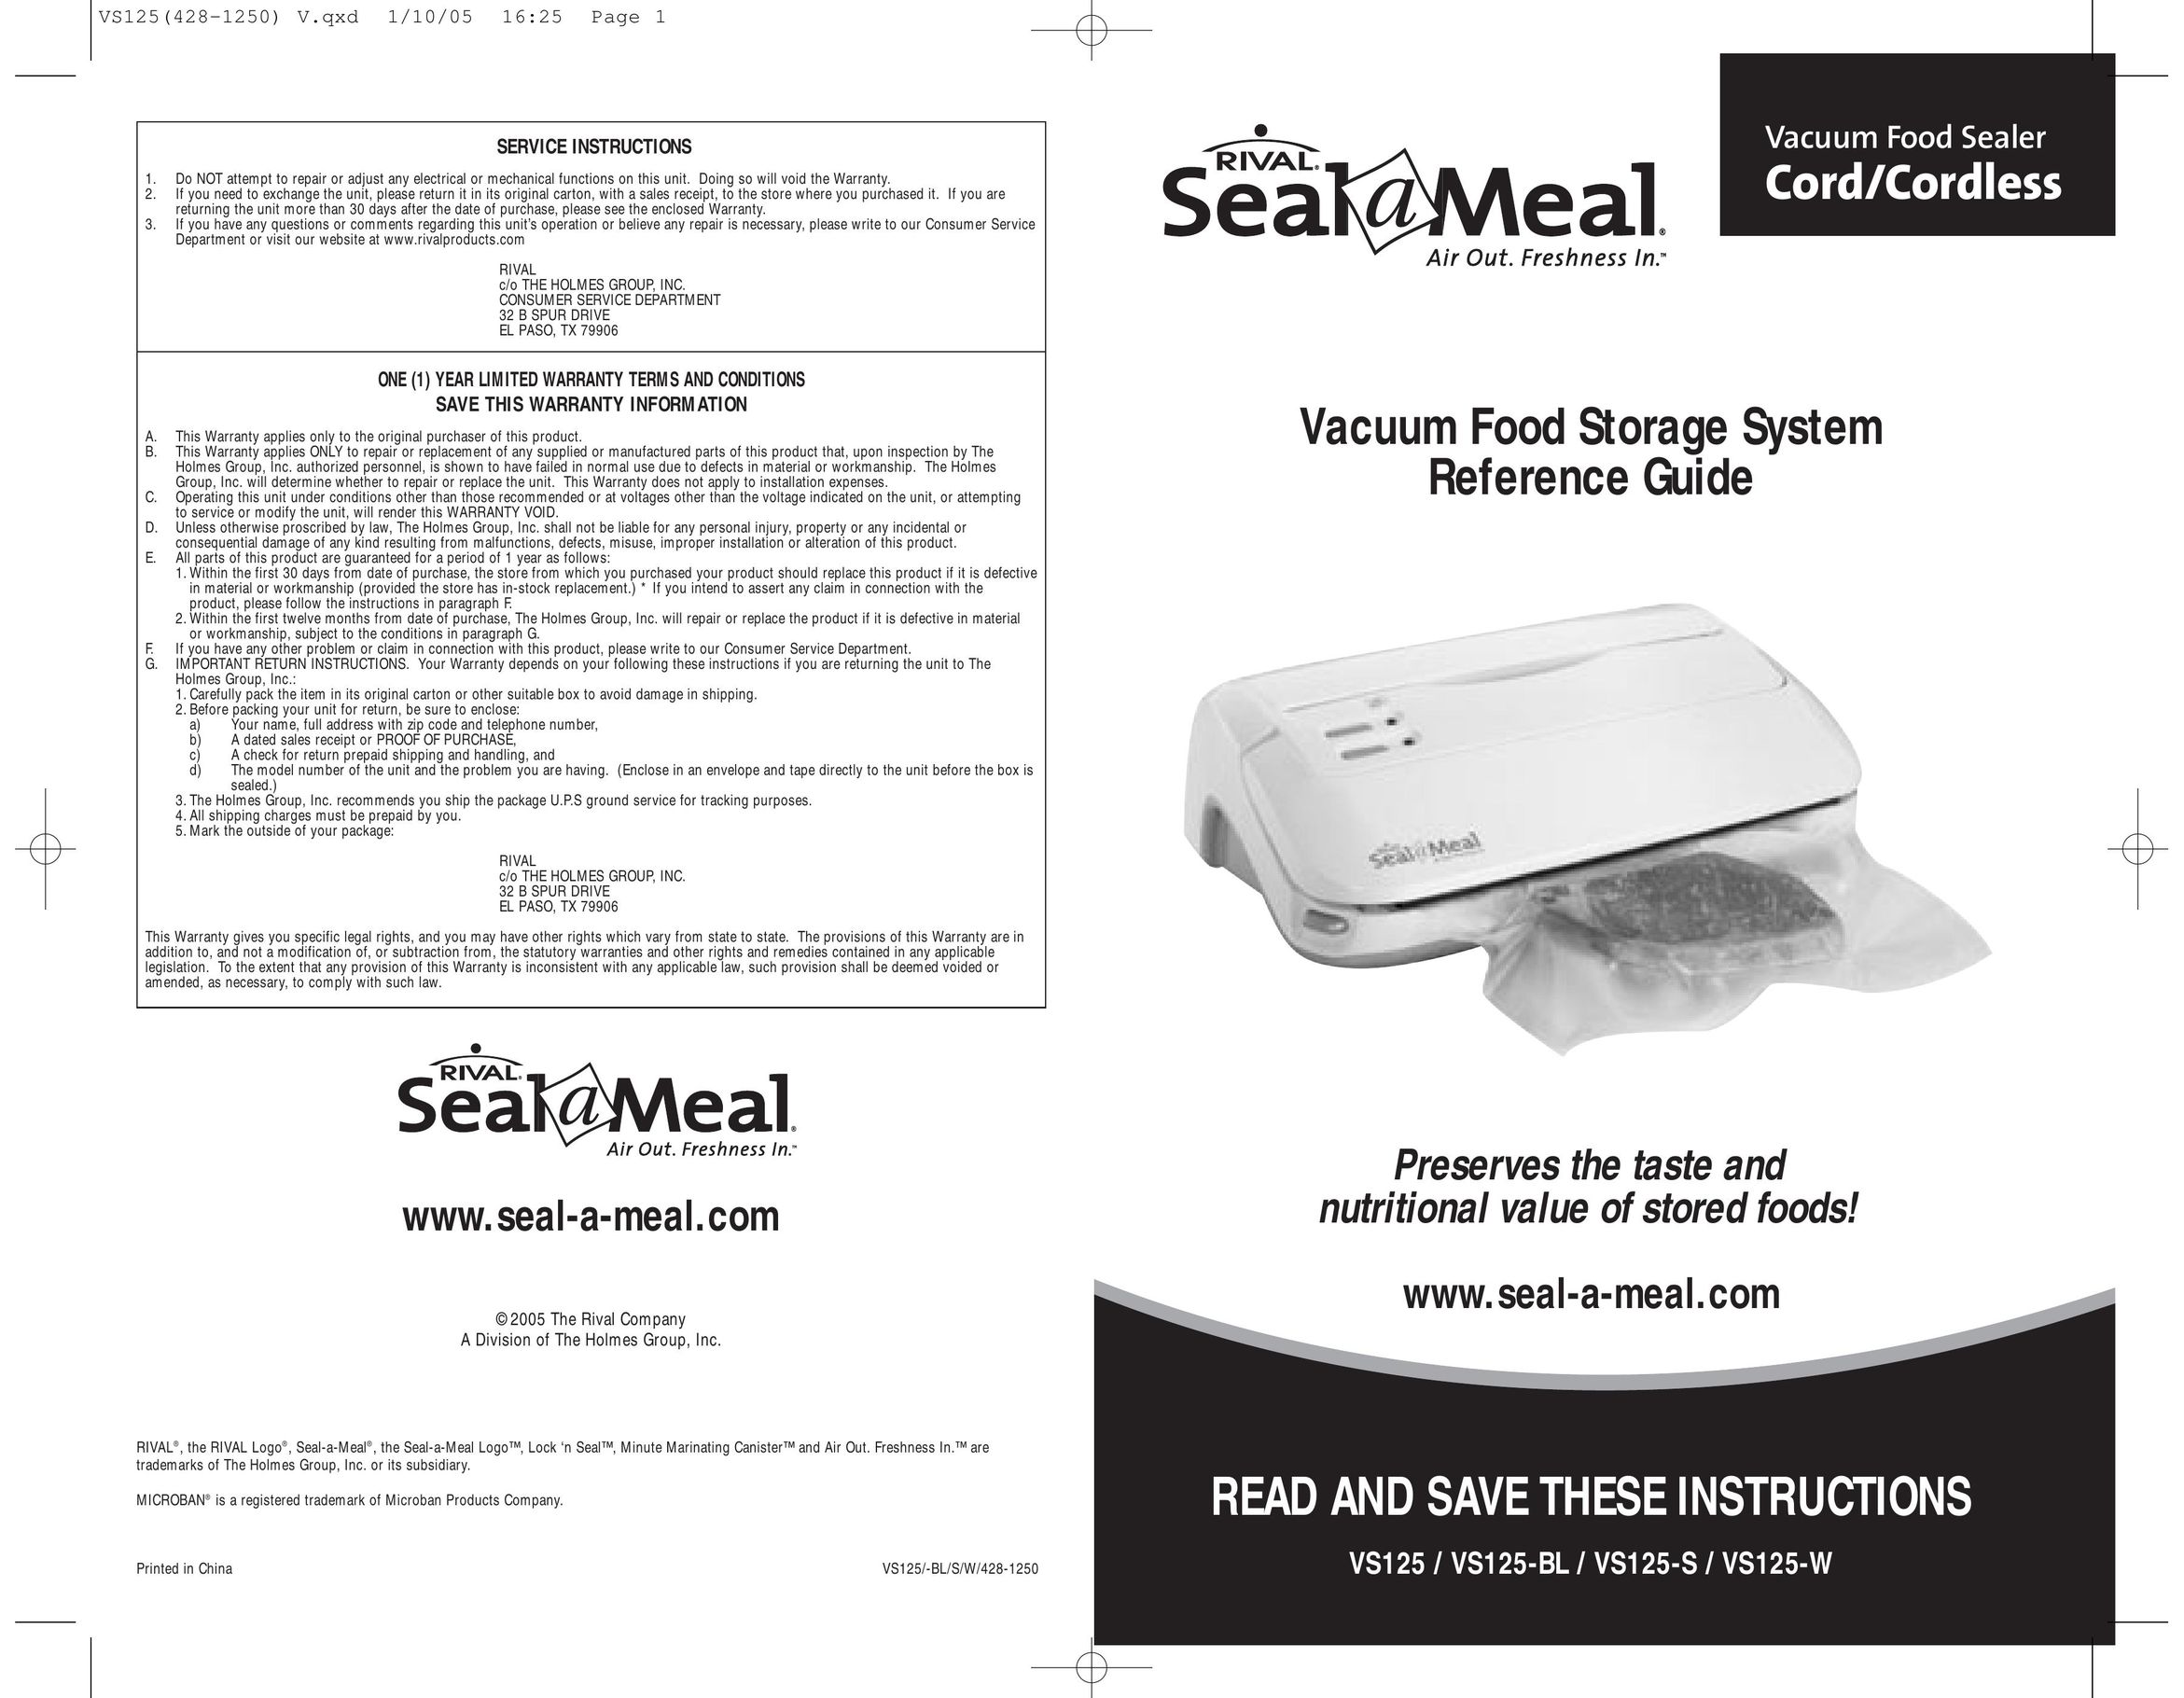 Seal-a-Meal VS125 Food Saver User Manual